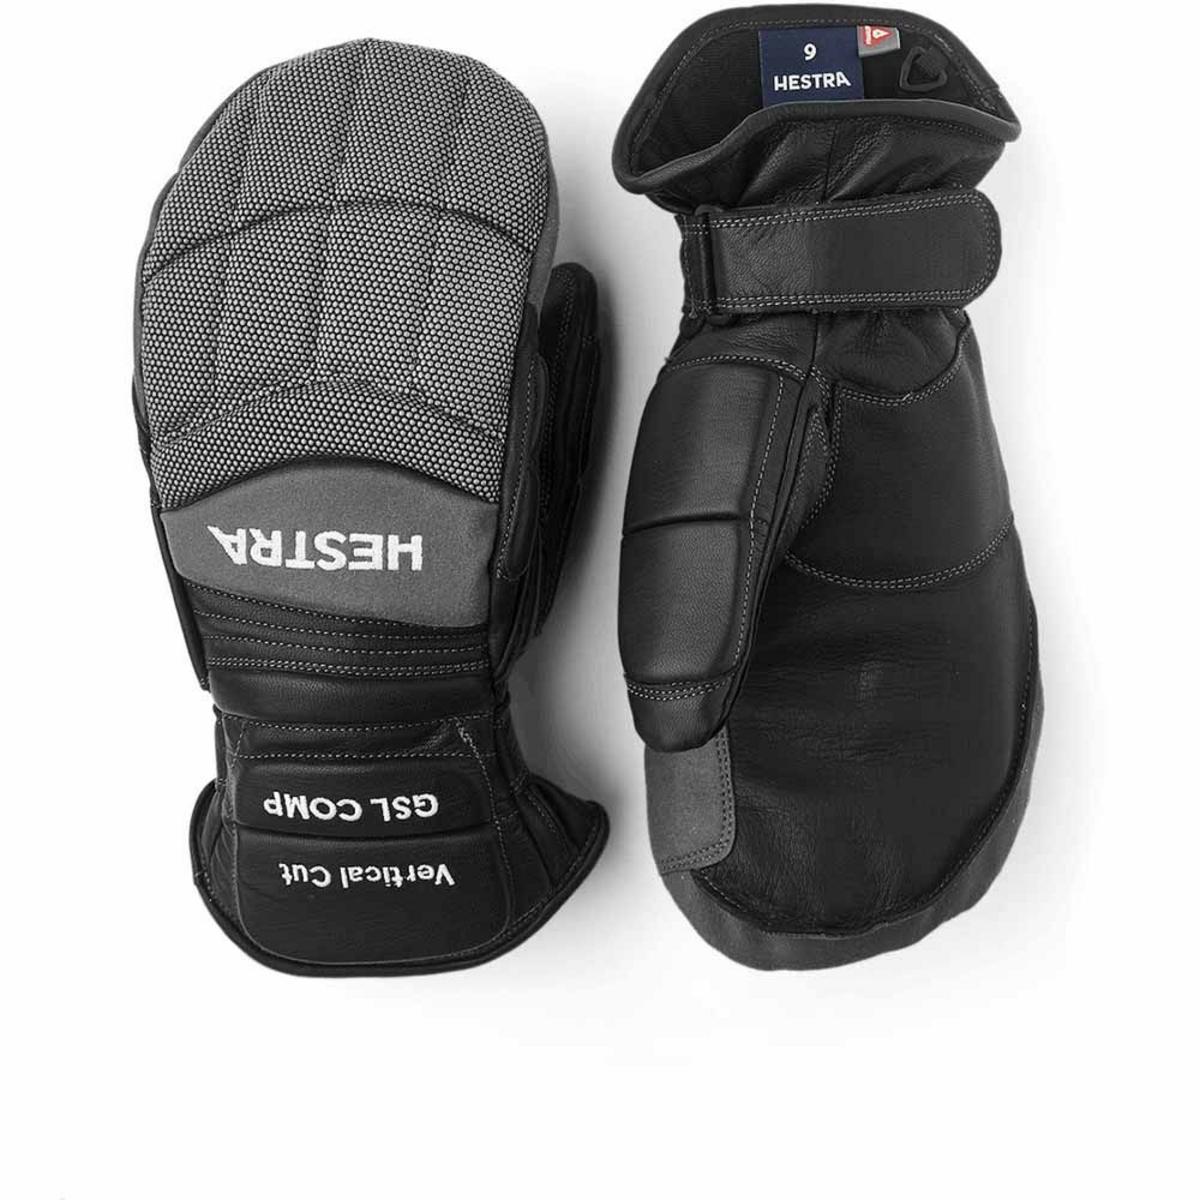 Hestra Unisex GSL Race Comp Ski Glove Mittens